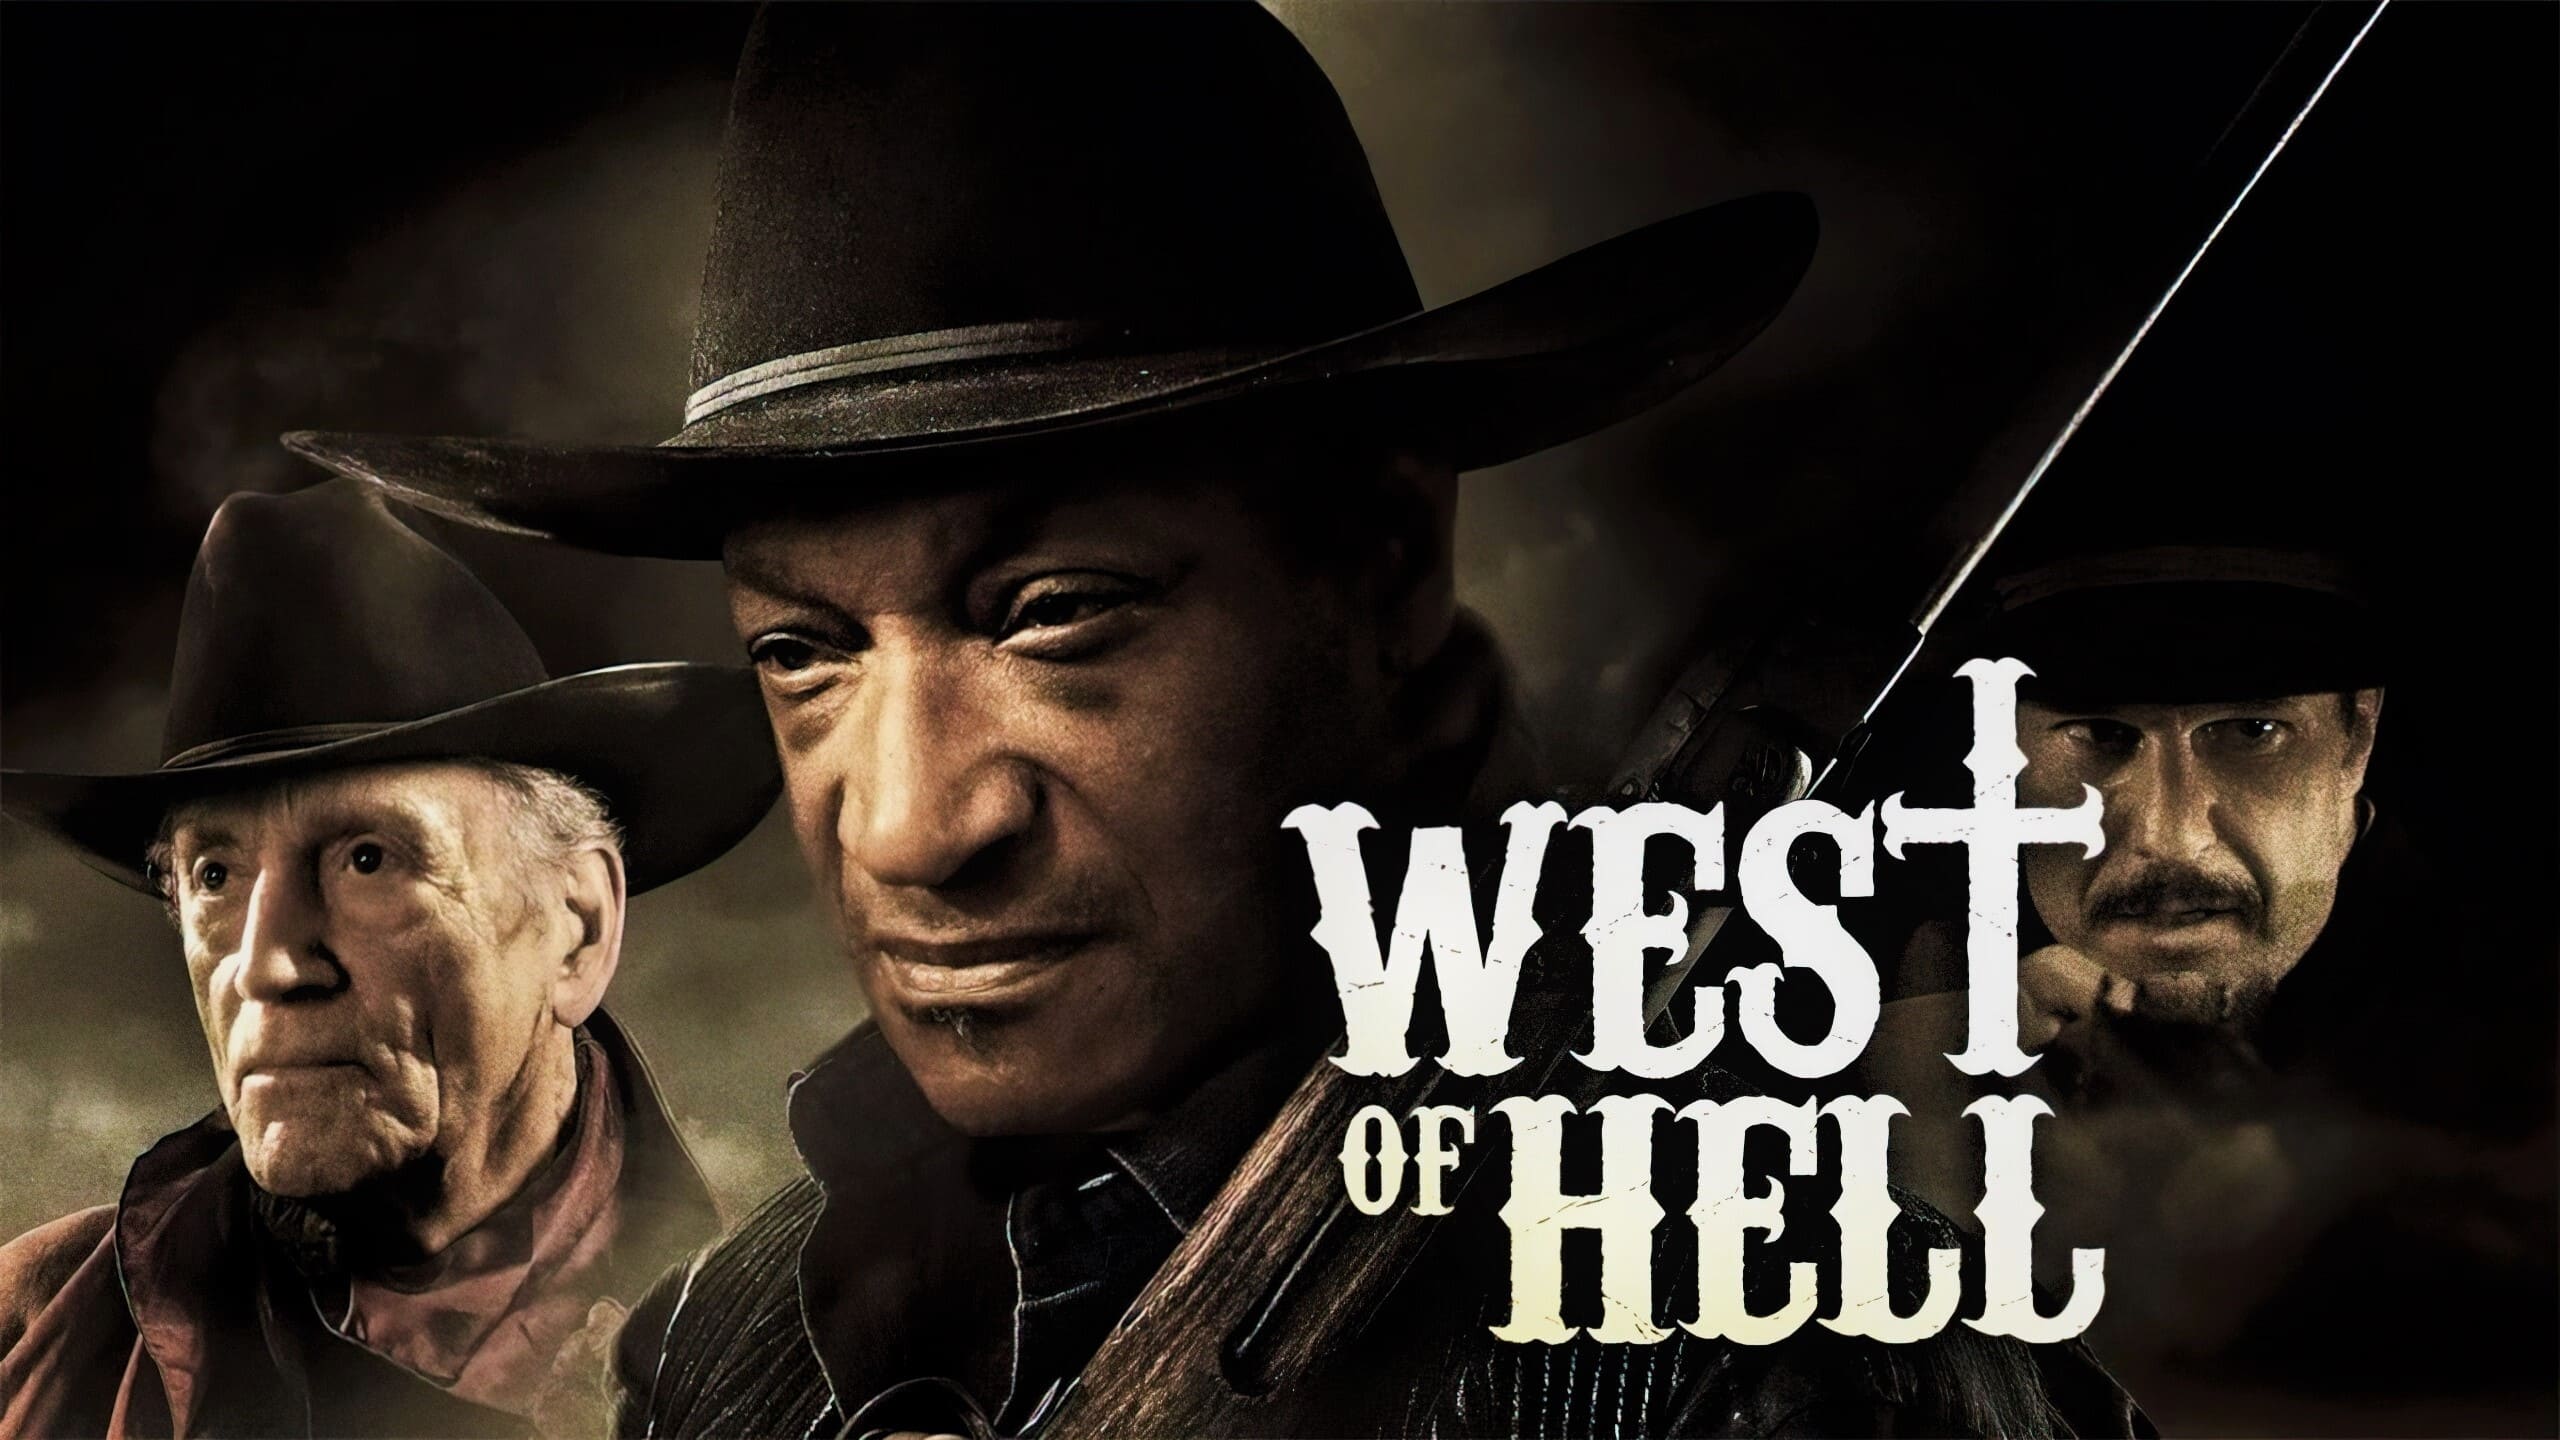 West of Hell - Express zur Hölle (2018)